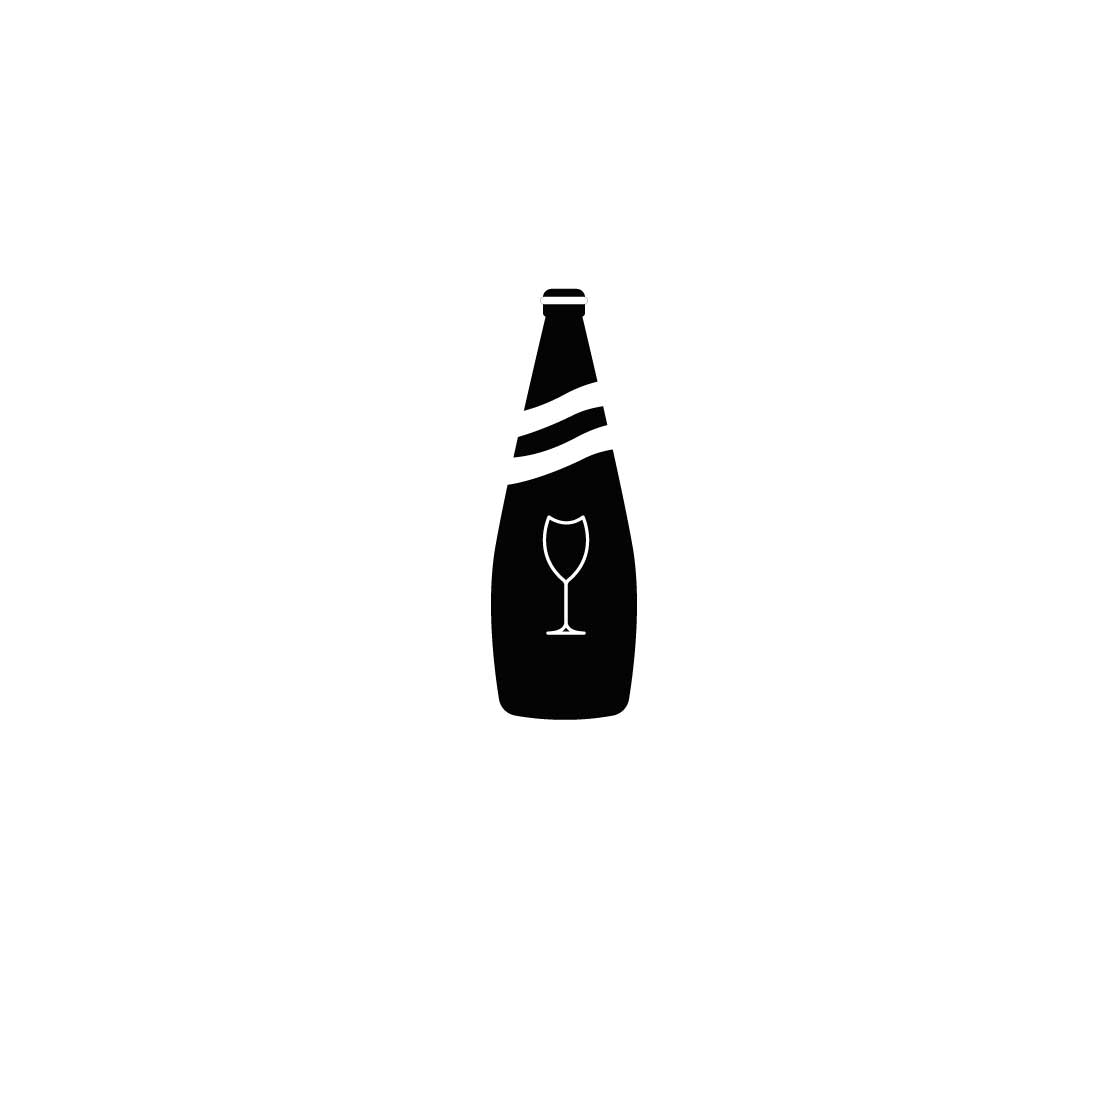 5 Bottle Icons Bundle for your design.